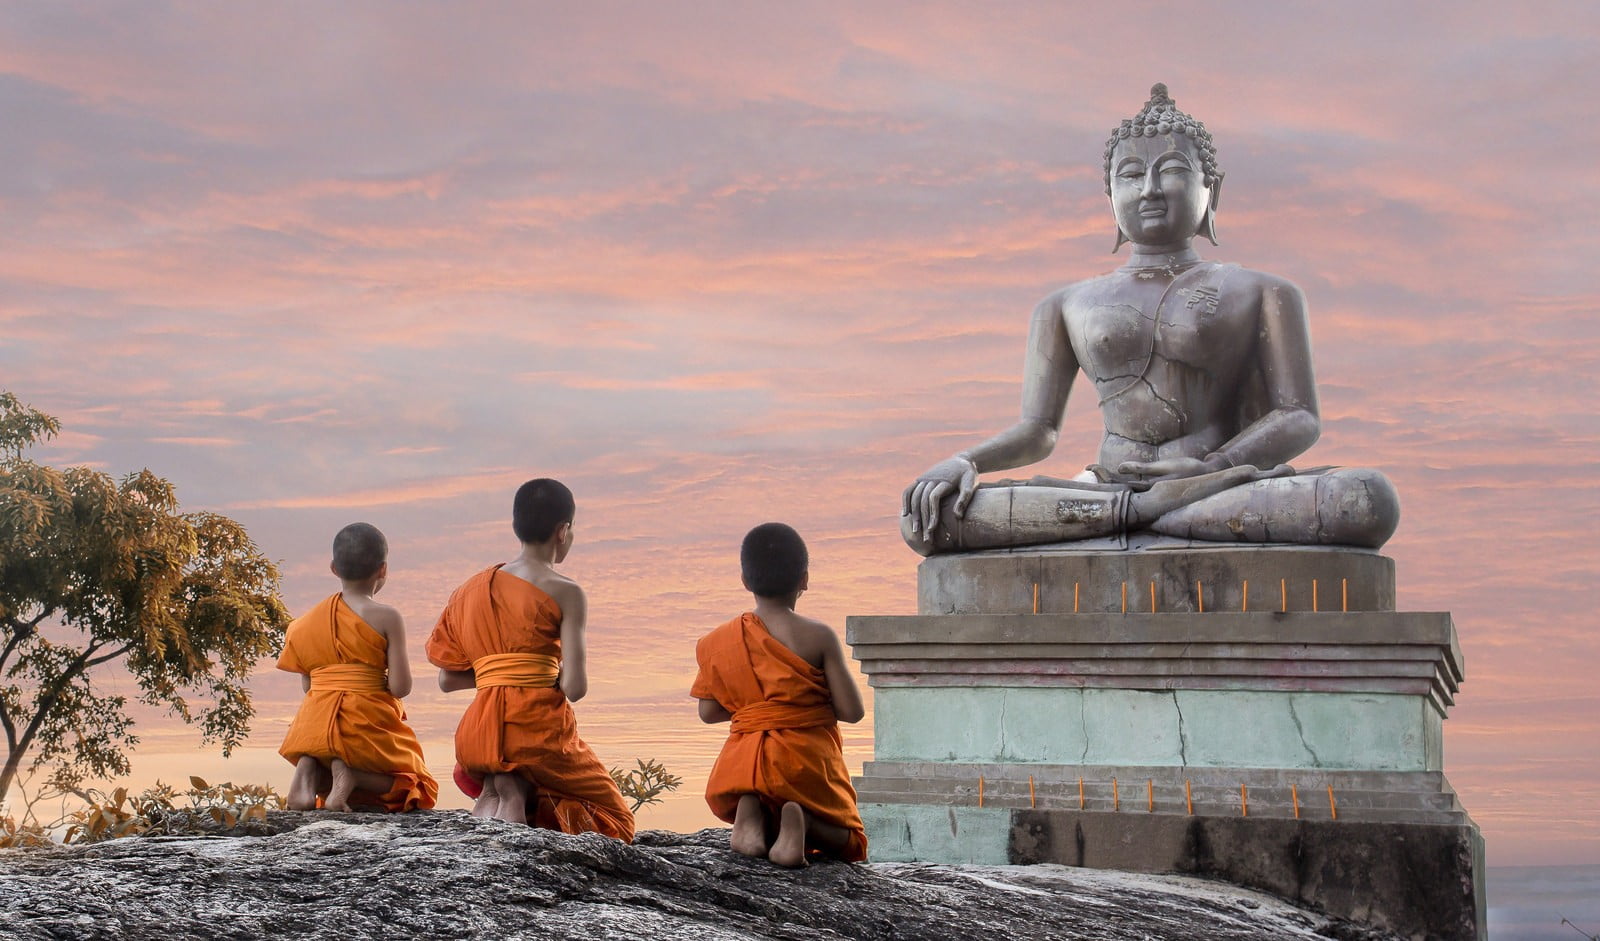 monks, Thailand, sitting, religion, spirituality, sky, sculpture